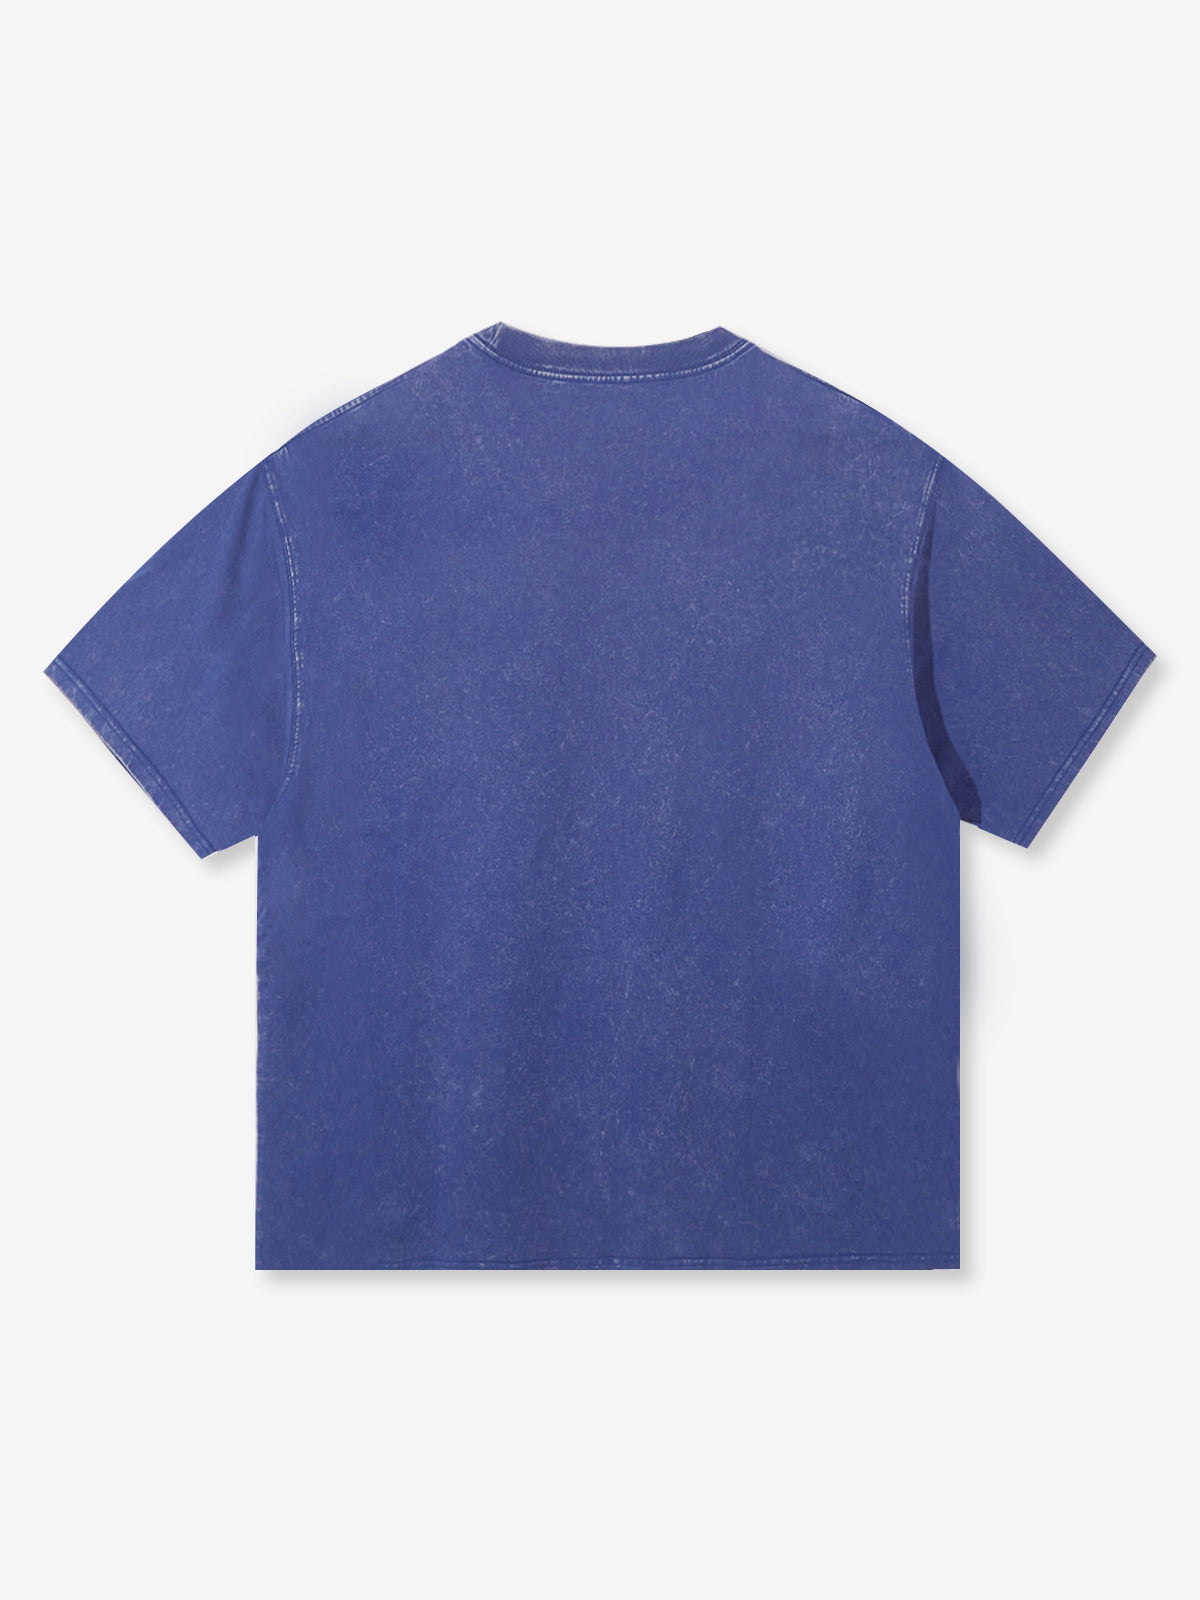 BOUNCE BACK© Blue Rose Braided Print 270g T-Shirt